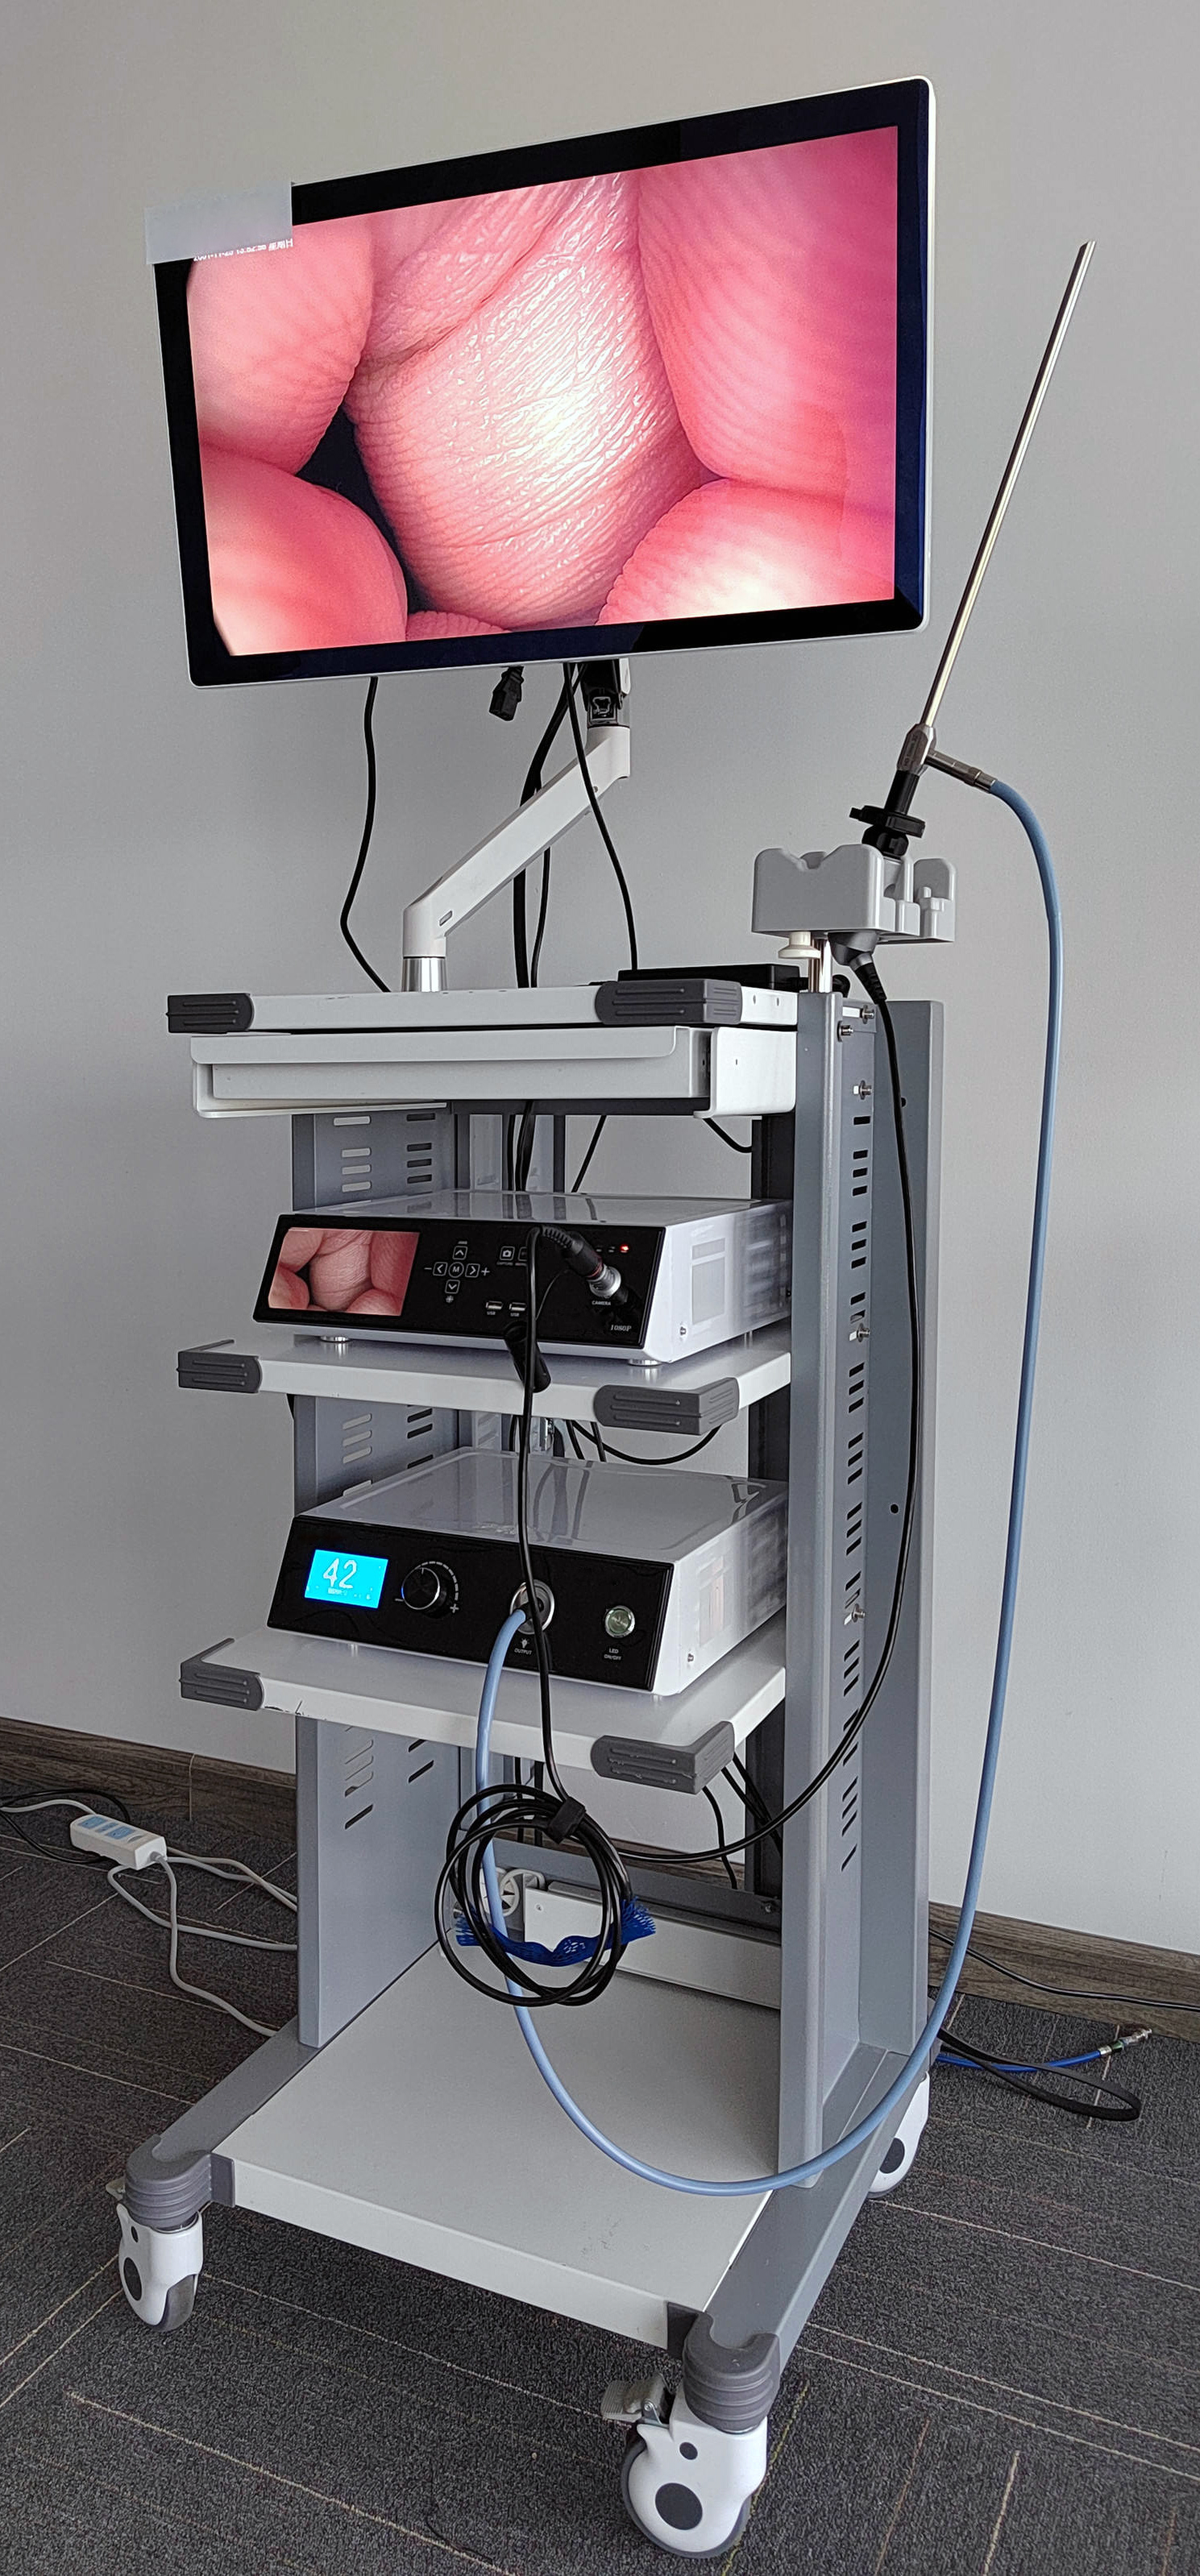 Full HD Medical Endoscopy Camera With USB Video Record 120W Light Source For Surgery Laparoscopy Arthroscope Gynecology